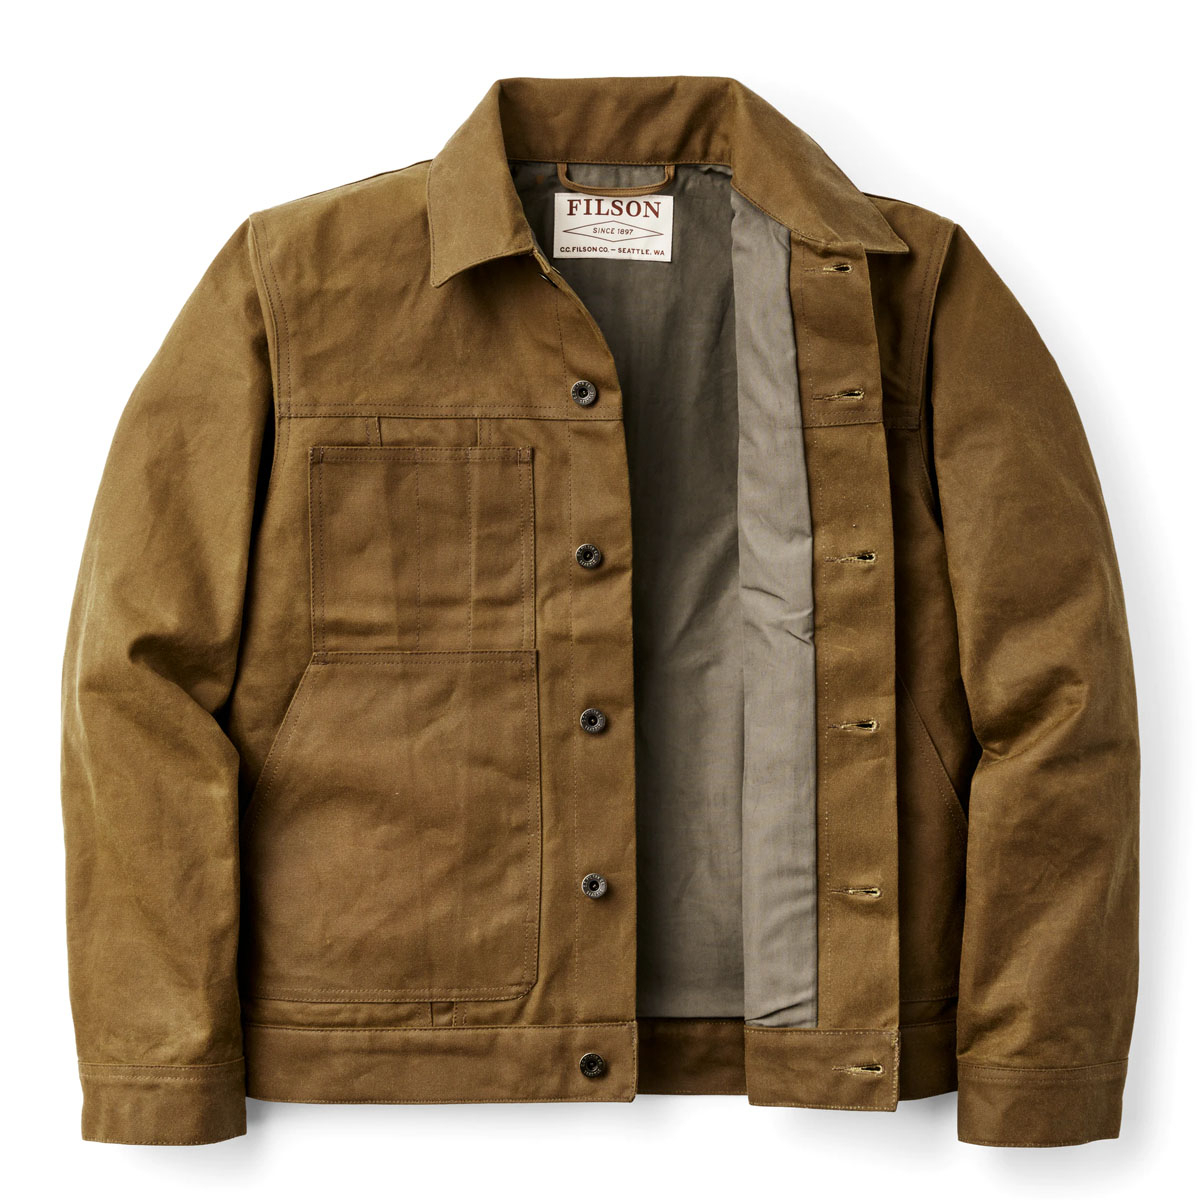 overtro emne Prestige Filson Tin Cloth Short Lined Cruiser Jacket Dark Tan, tough work jacket